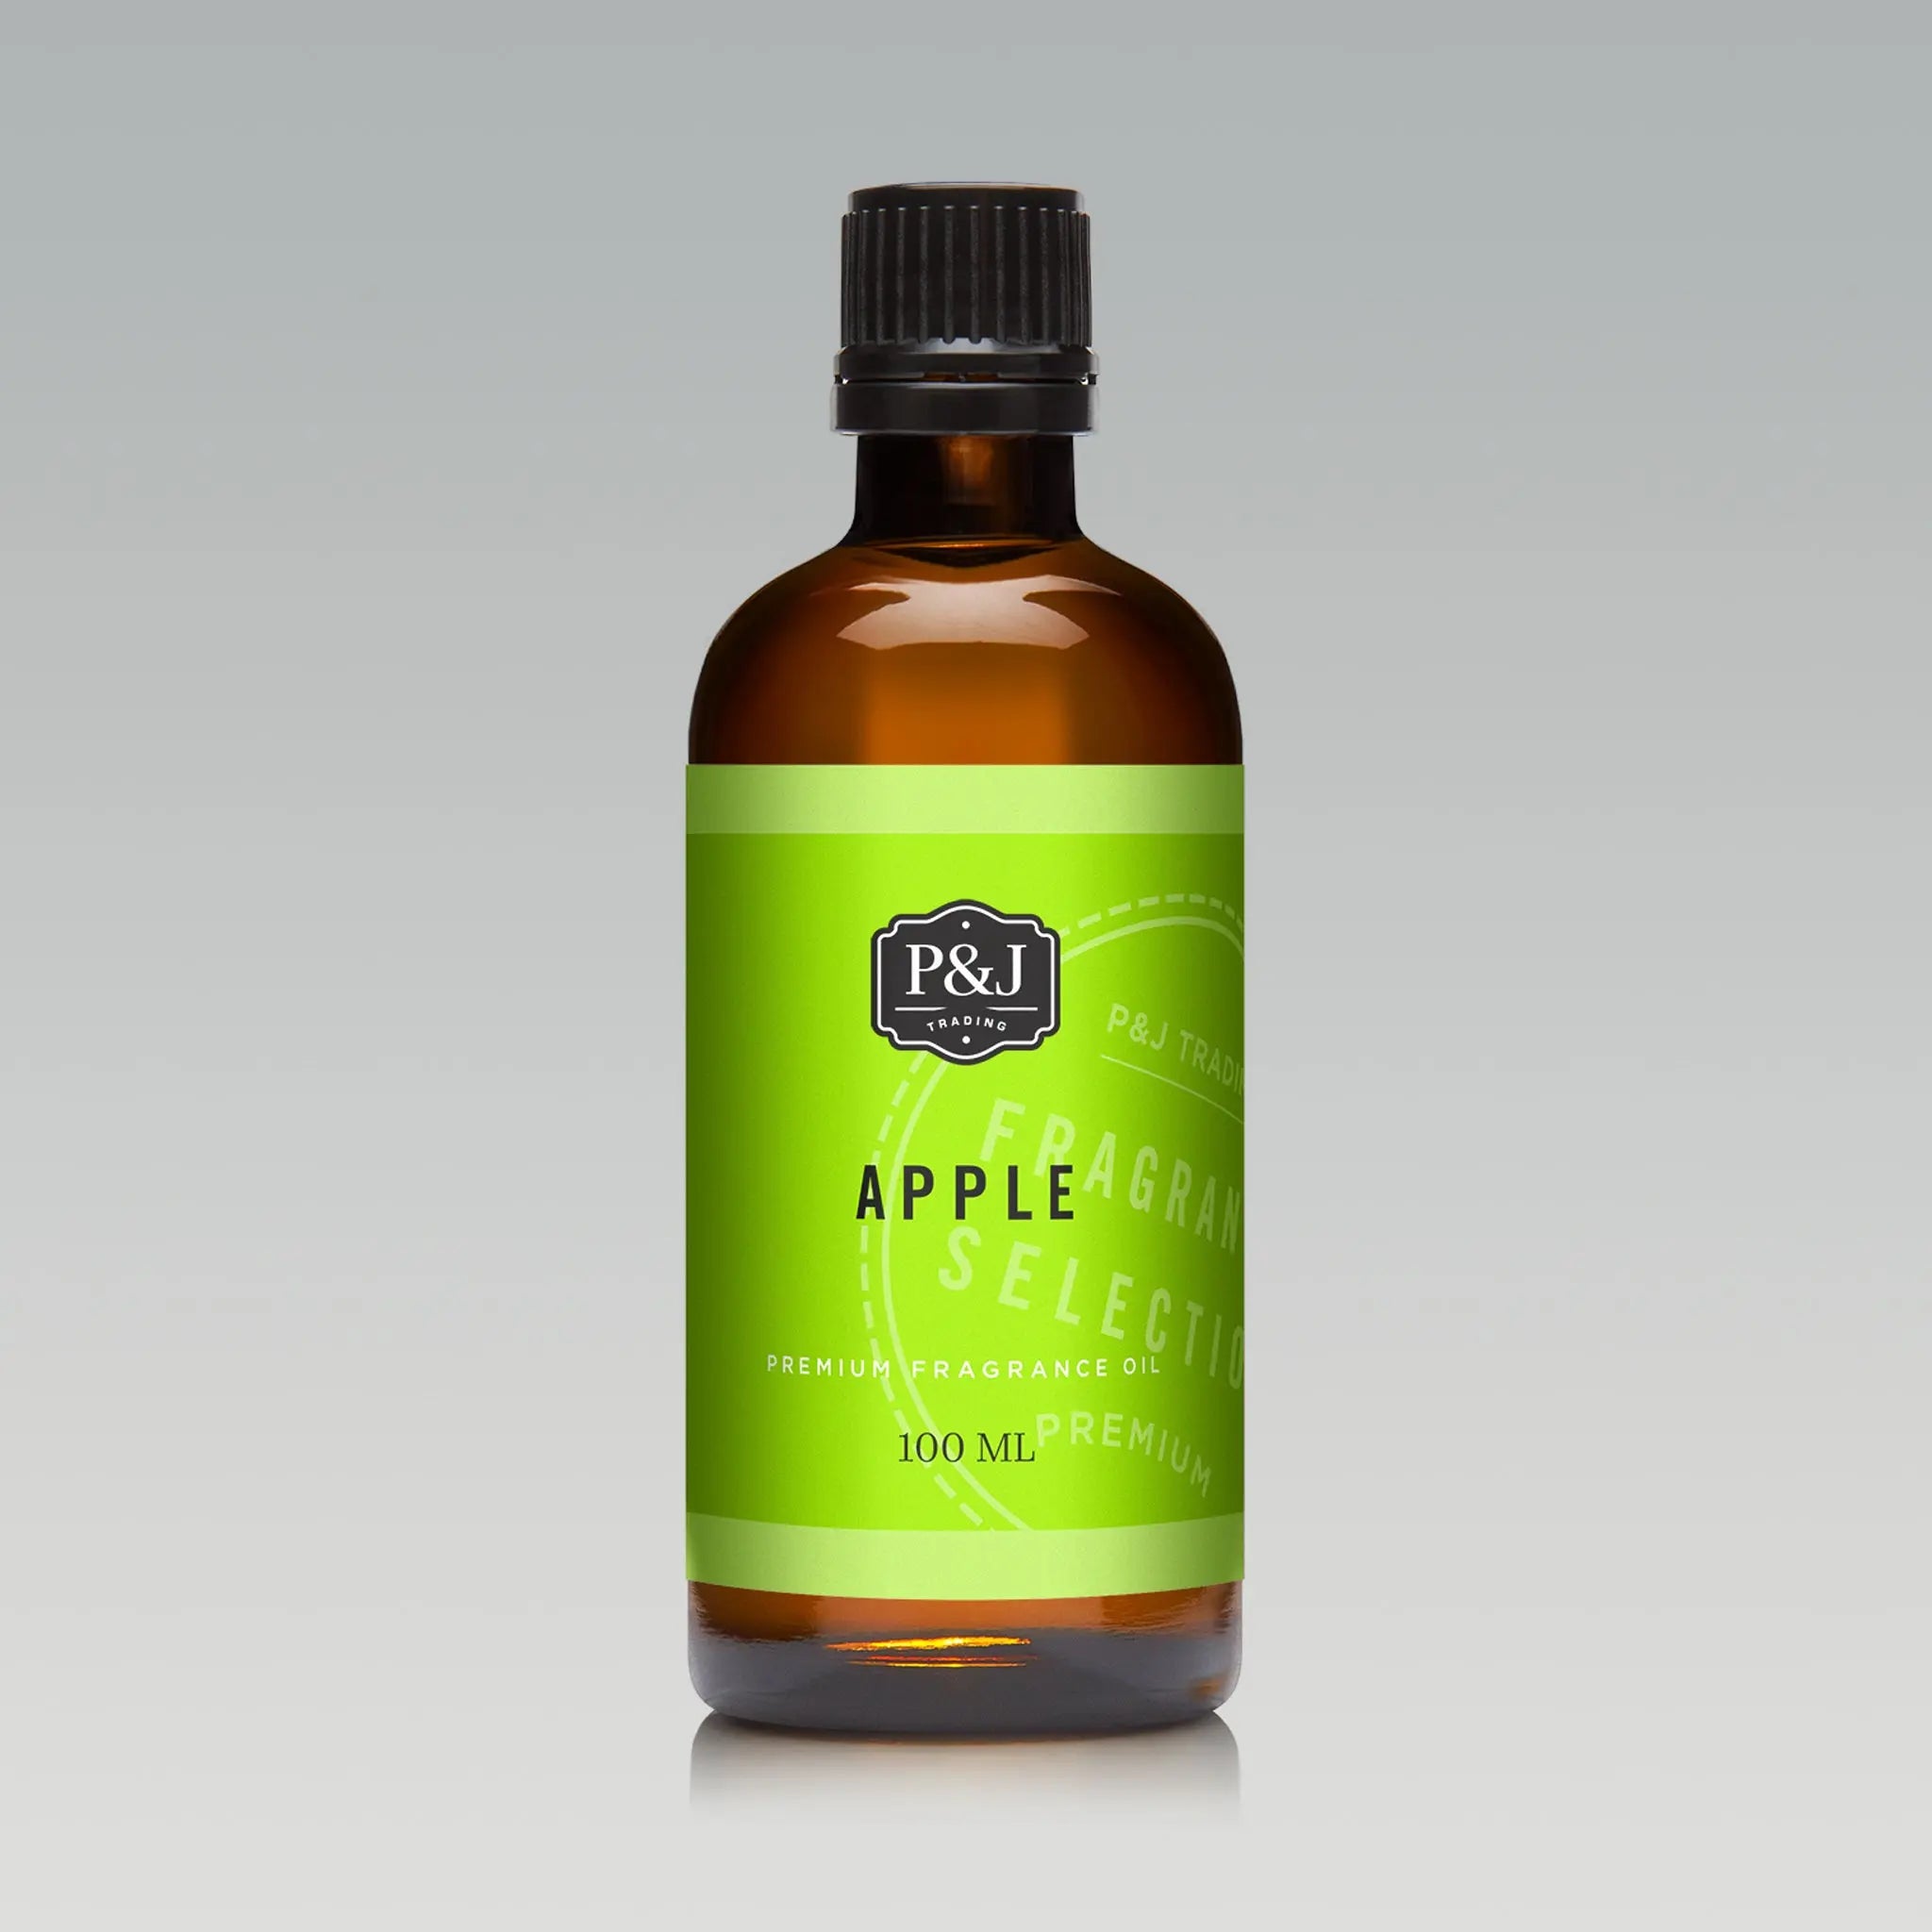 Apple Fragrance Oil - Premium Grade Scented Oil - 100ml